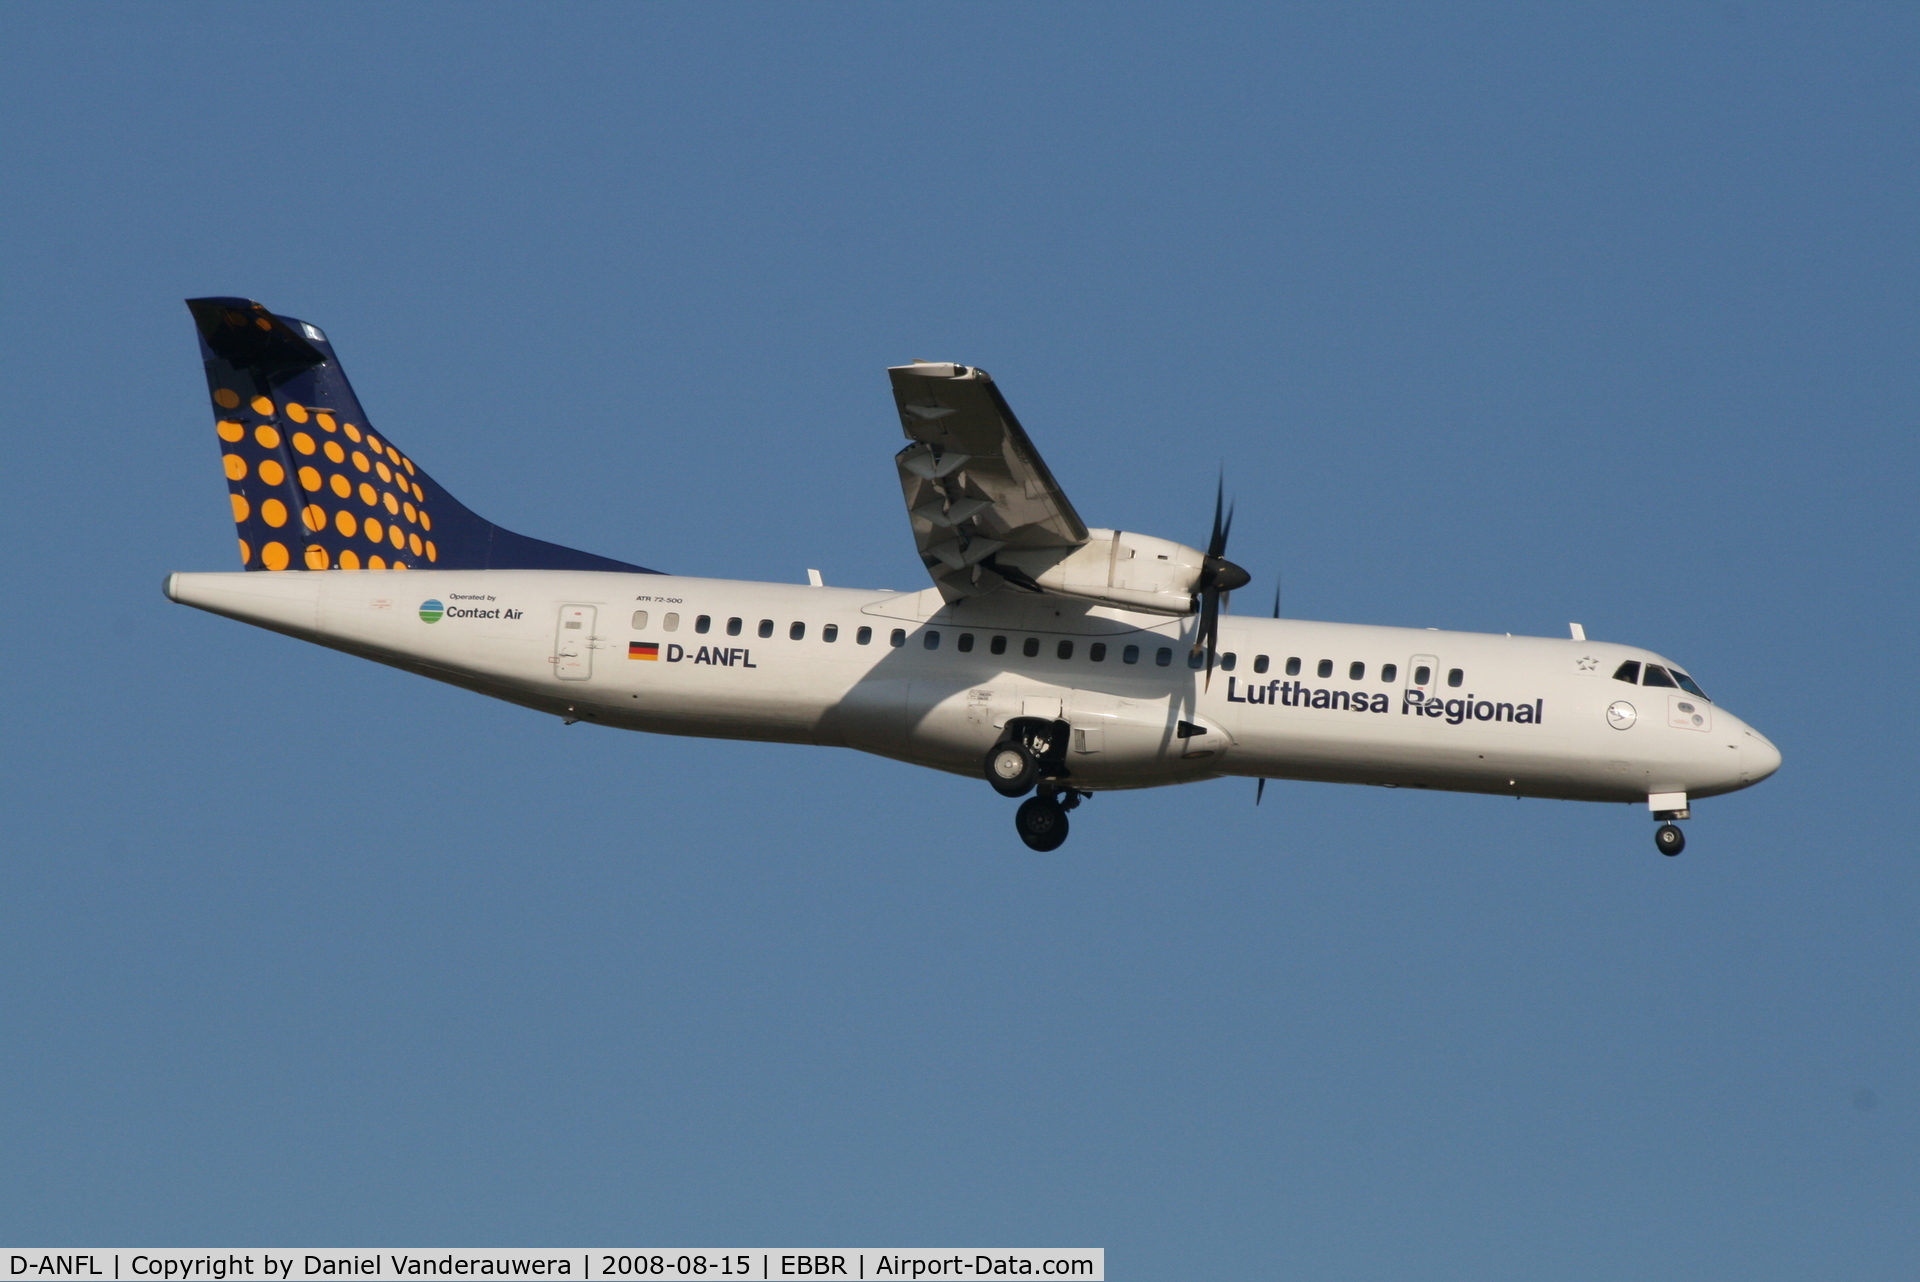 D-ANFL, 2001 ATR 72-212A C/N 668, arrival of flight LH4650 to rwy 02